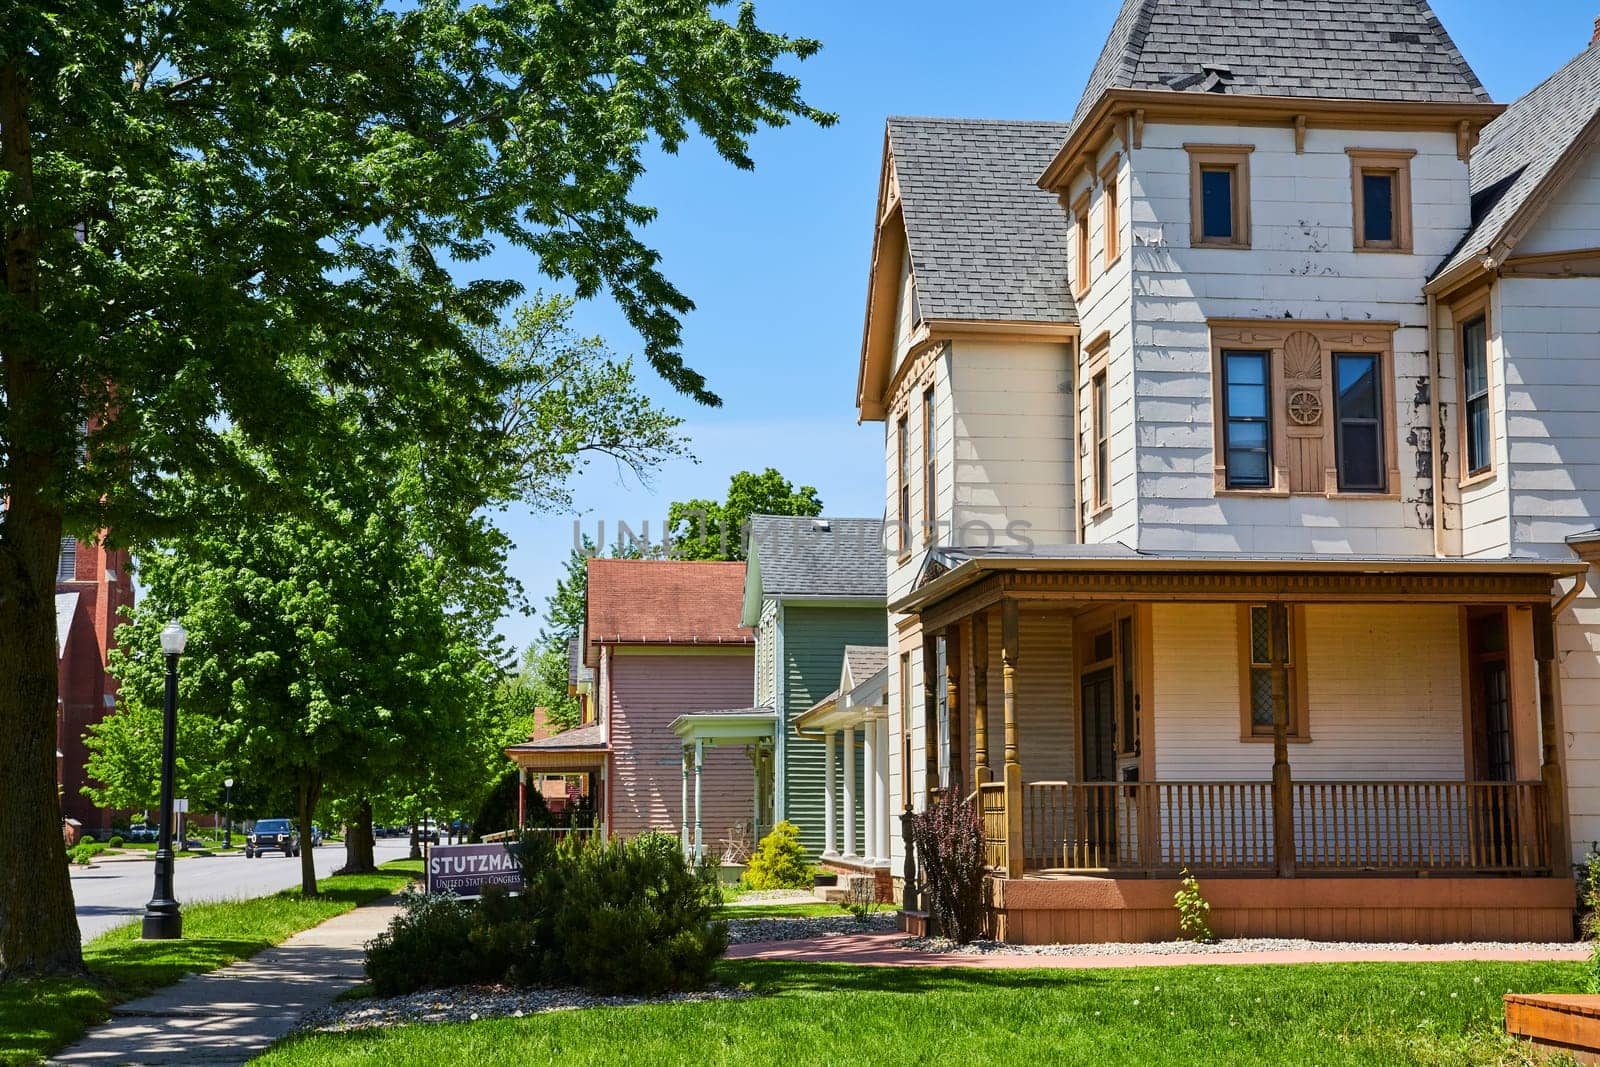 Quaint Victorian homes line a sunny street in historic Fort Wayne, Indiana, embodying serene suburban life.